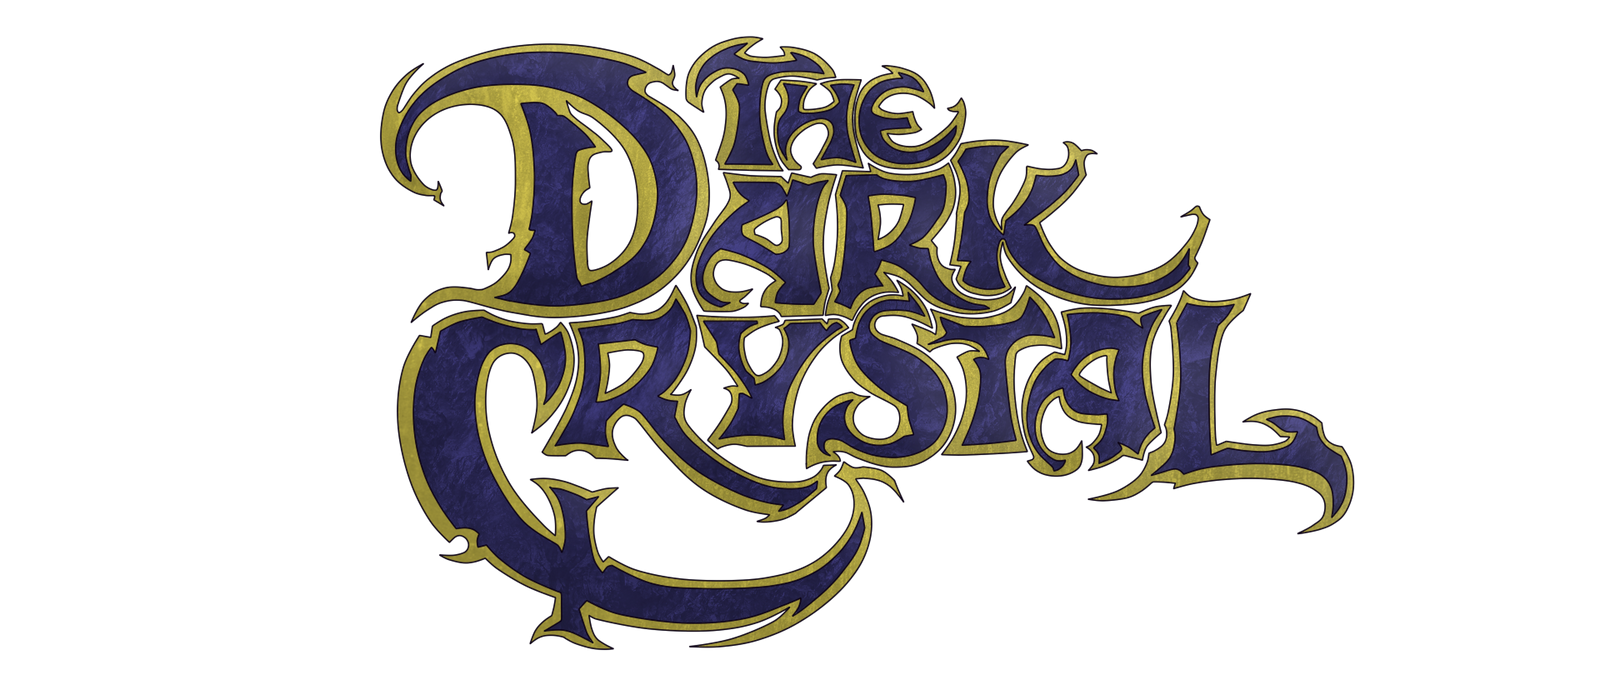 Dark Crystal logo.